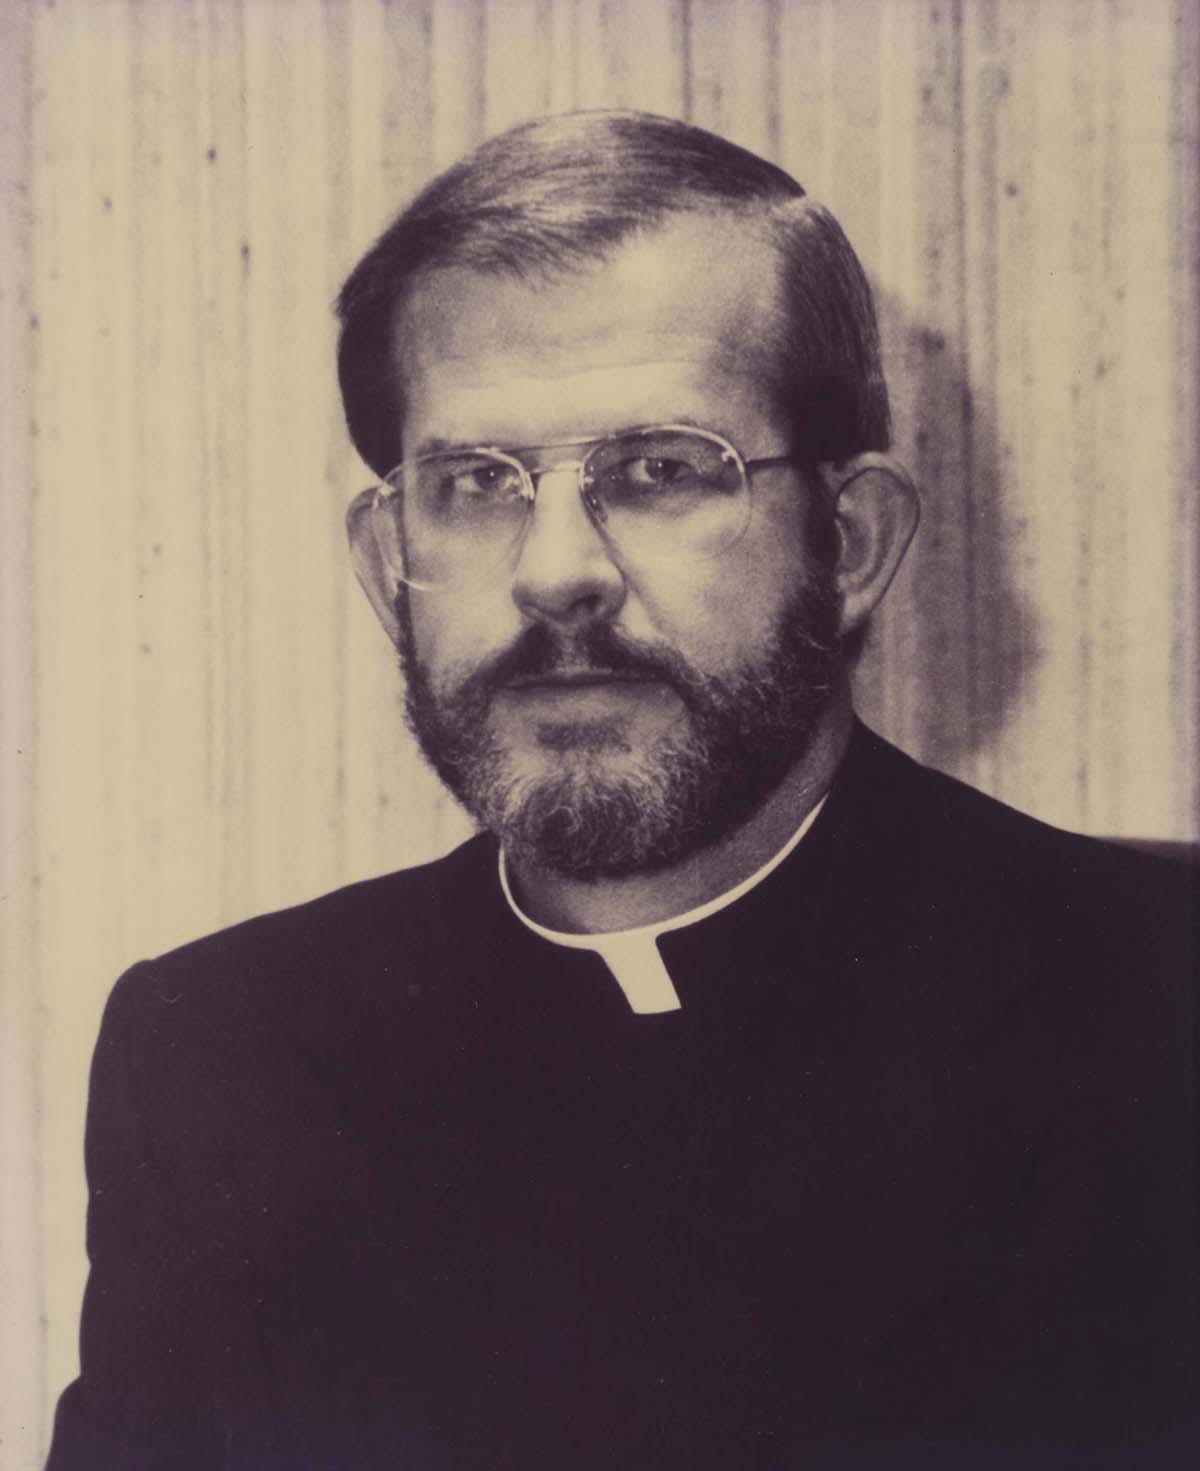 Rev. John E. Linnan